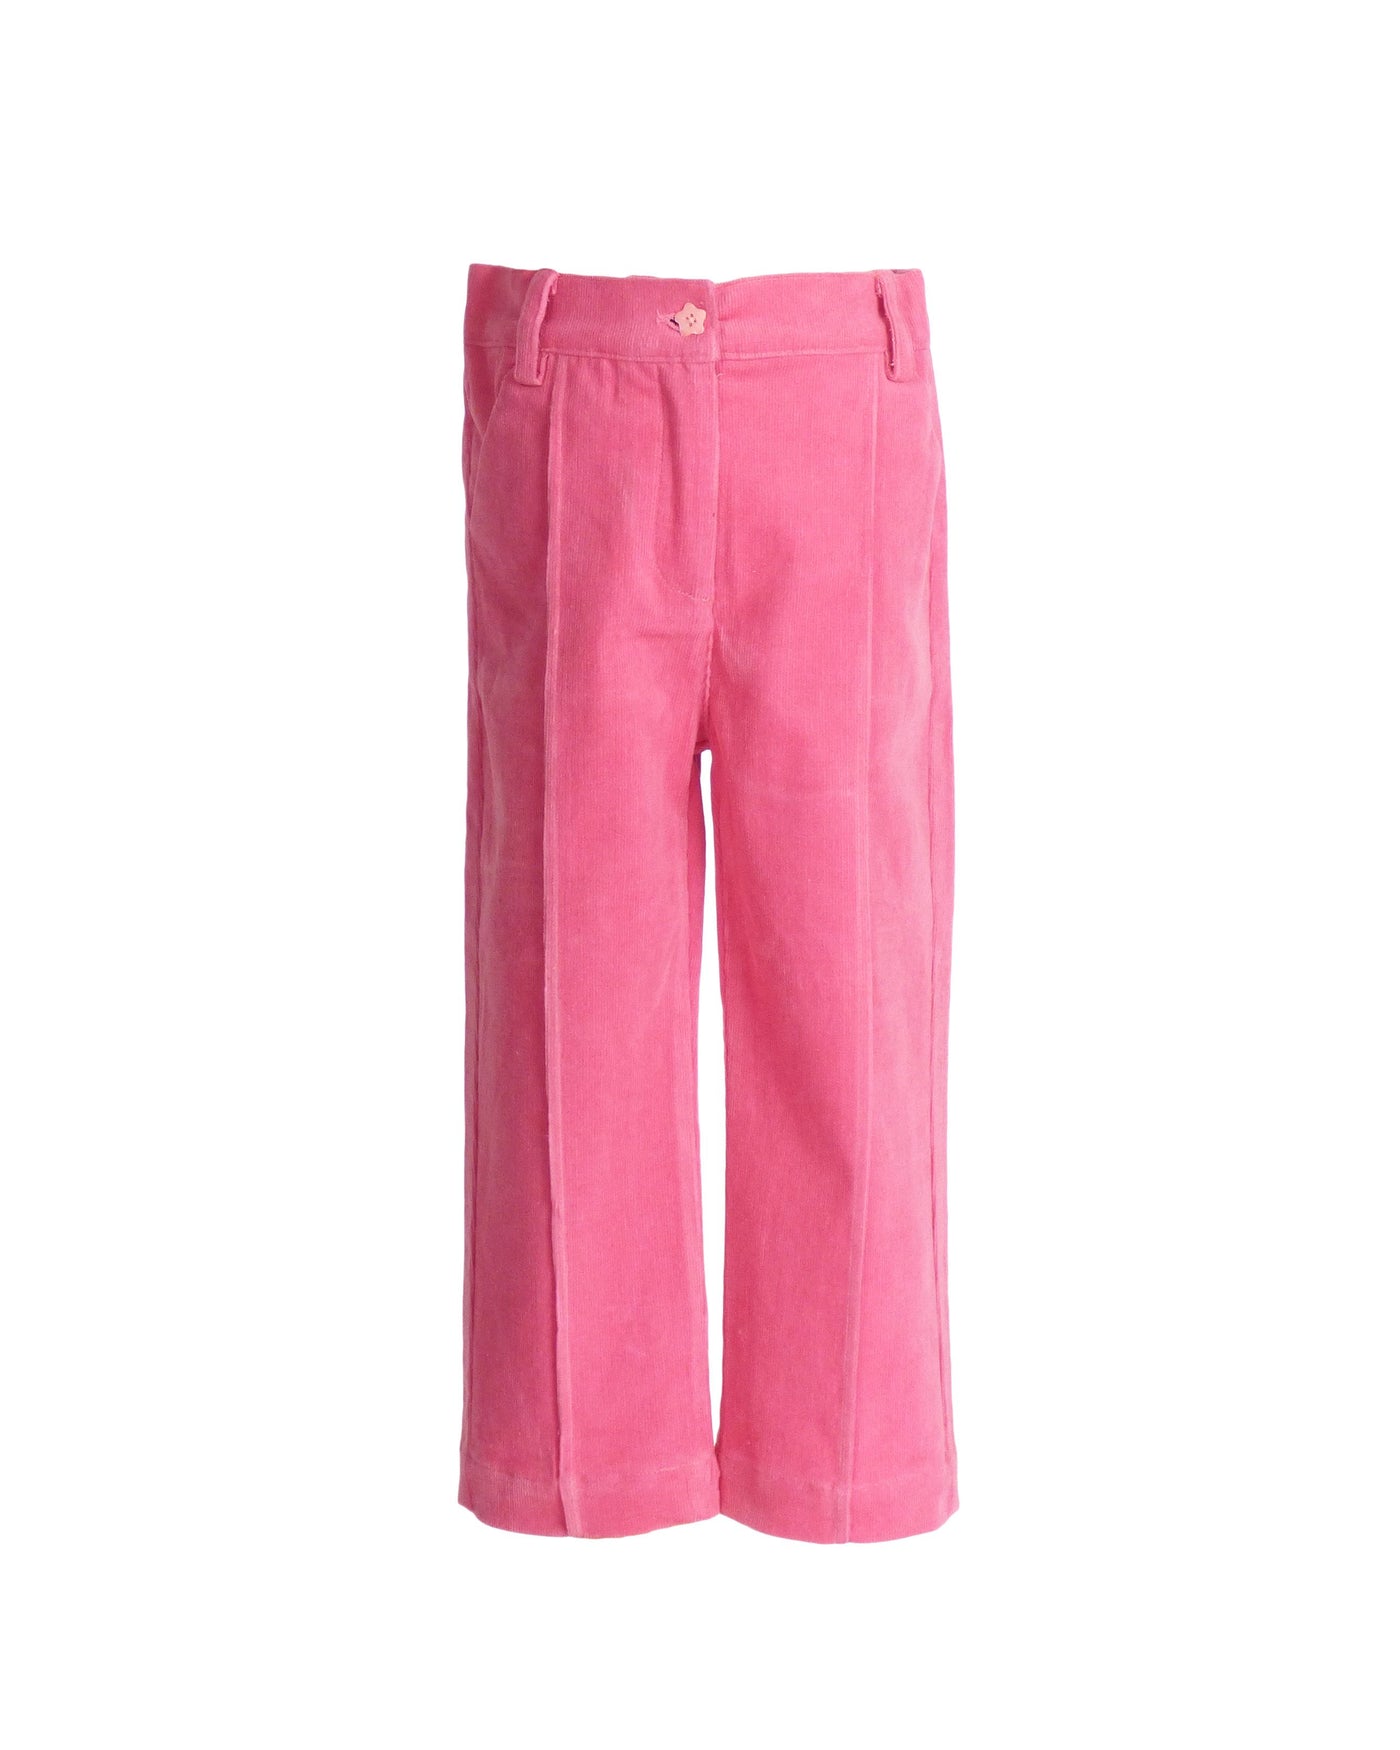 Pink Stretch Corduroy Poppy Pants